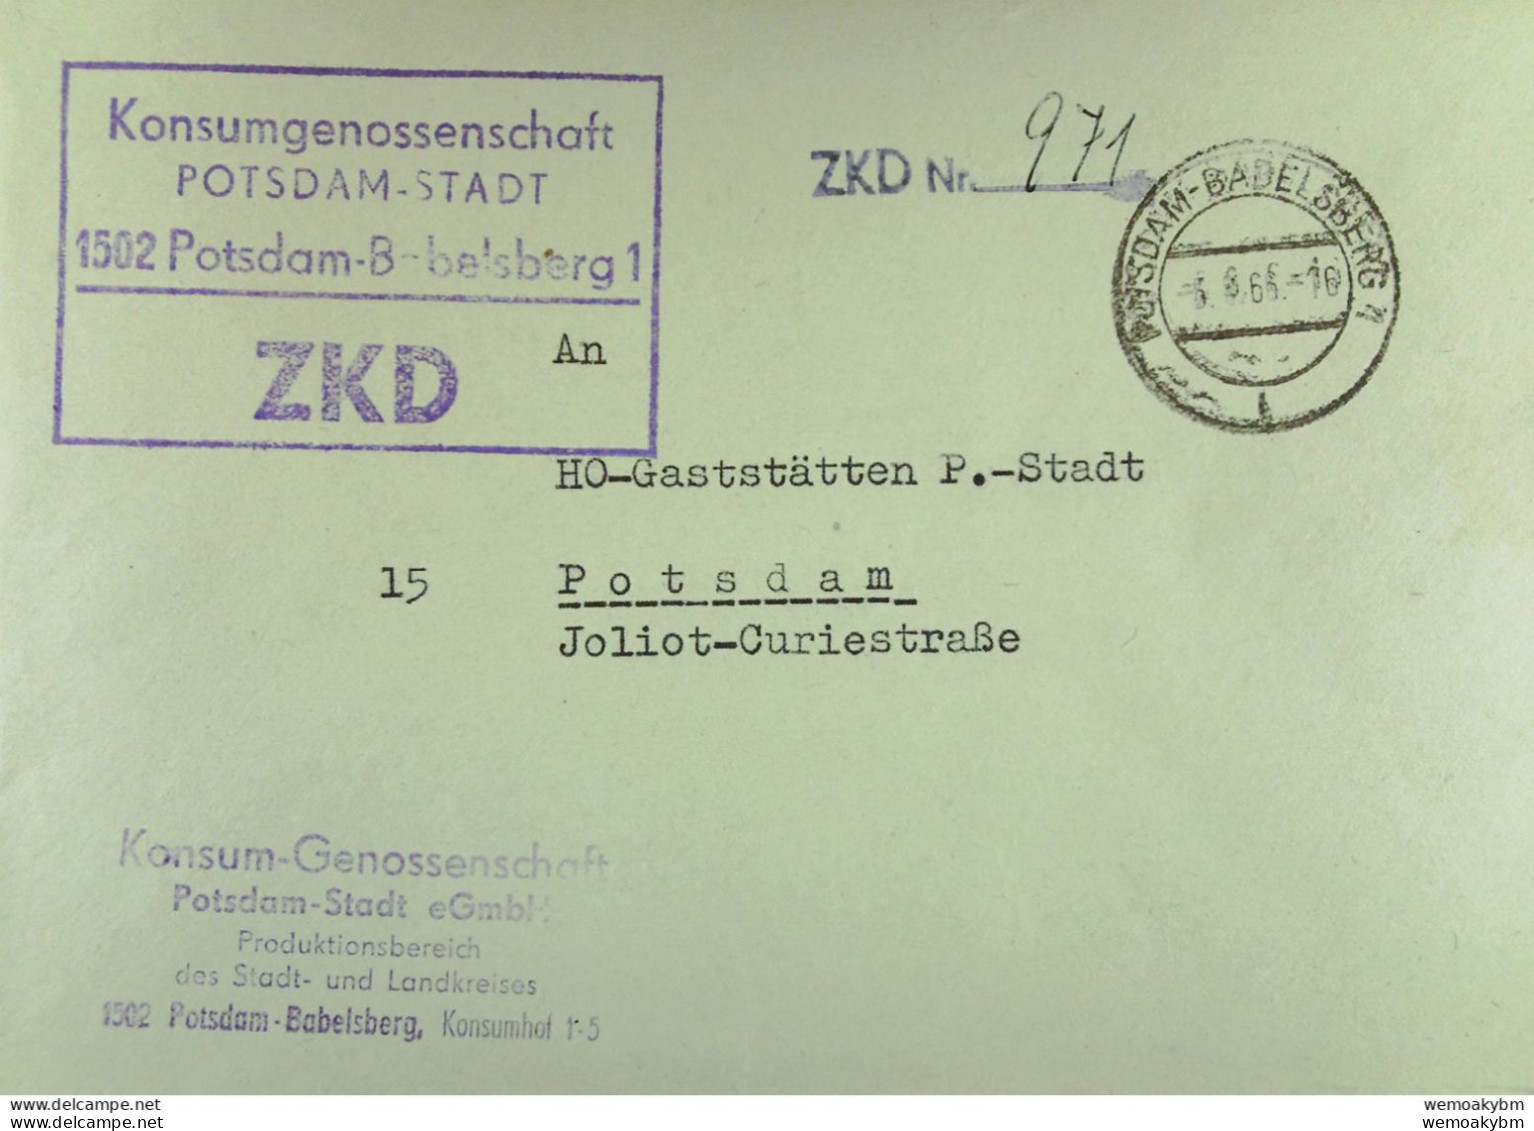 Orts-Brief Mit ZKD-Kastenstpl. "Konsum-Genossenschaft P-Stadt 1502 Potsdam-Babelsberg1" Vom 5.8.66 An HO Potsdam-Stadt - Zentraler Kurierdienst